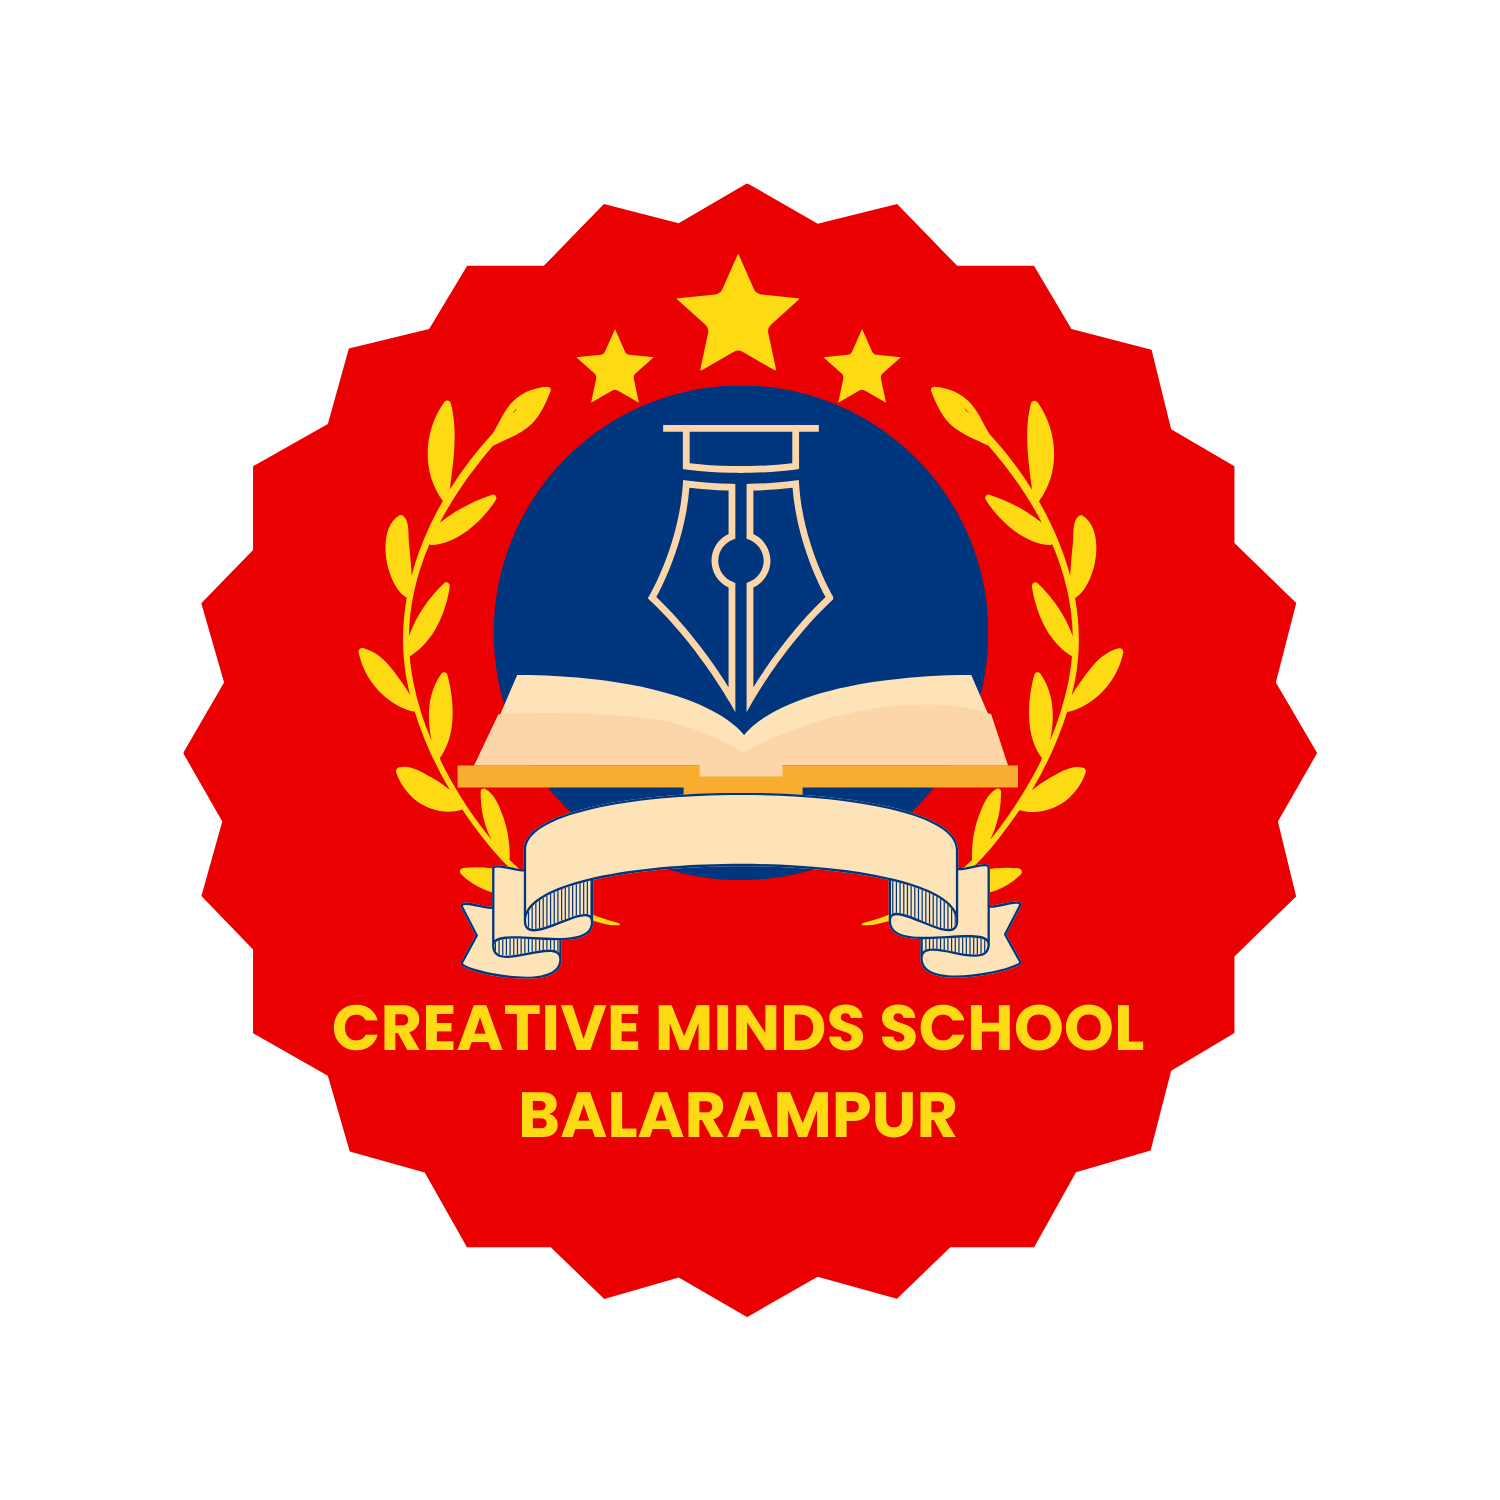 Creative Minds School Balarampur